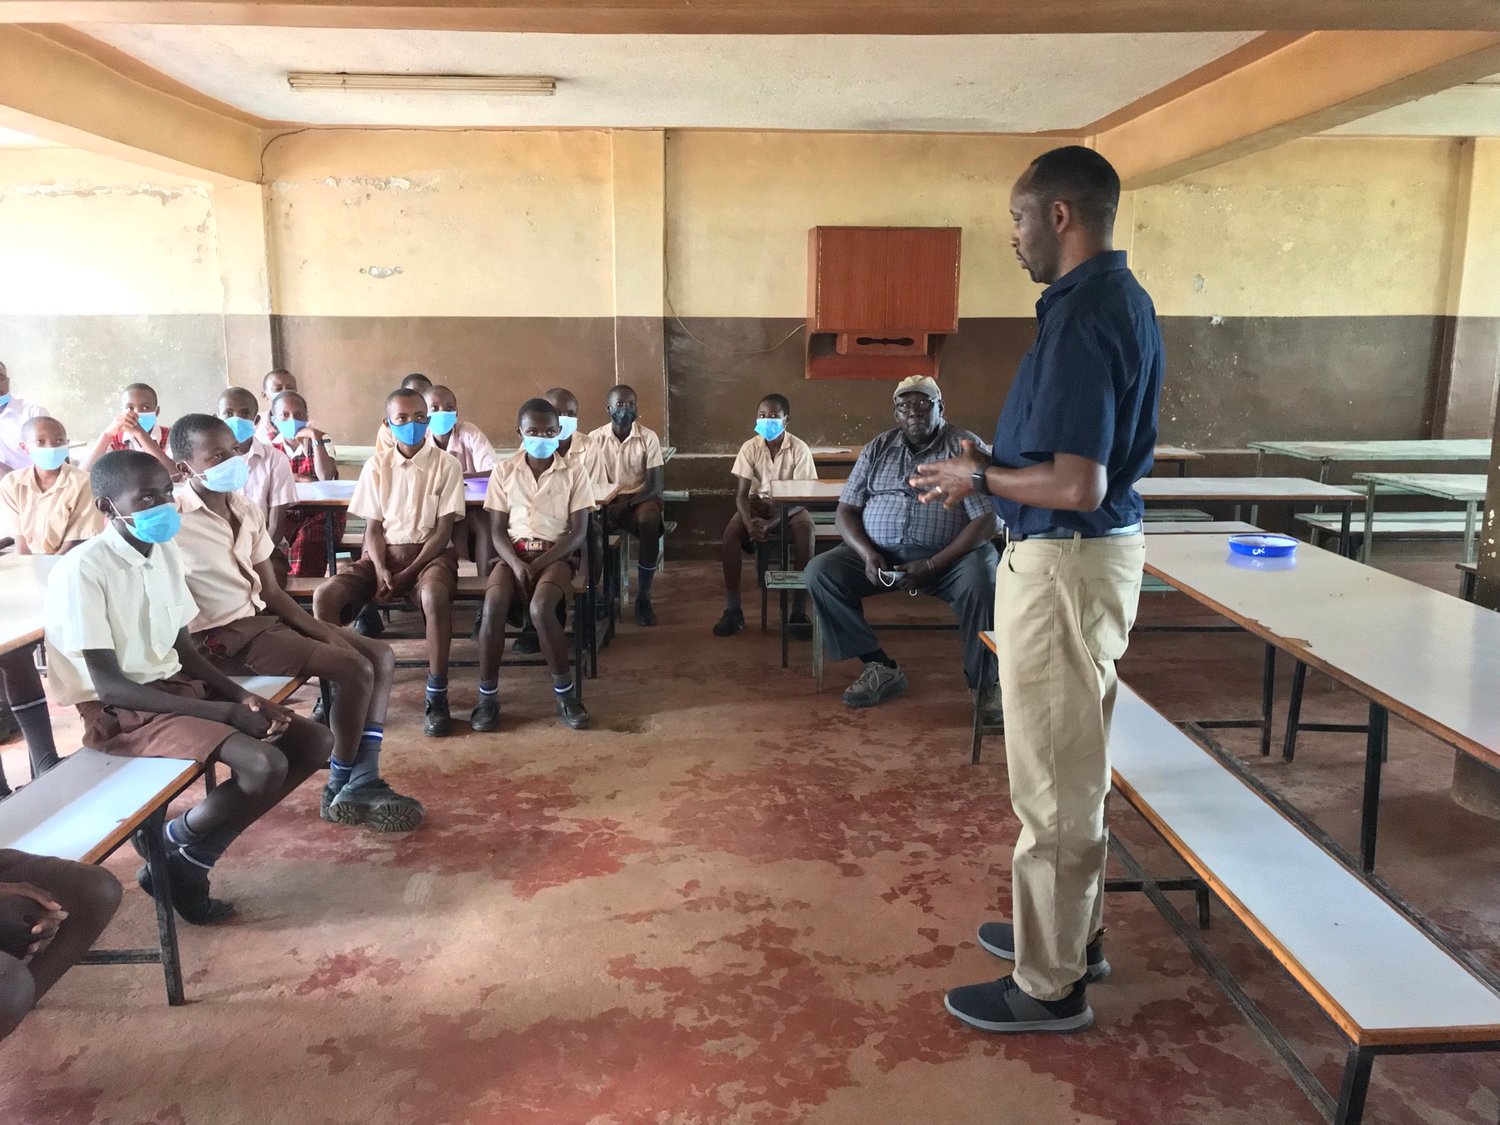 Samuel Mwangi Ndungu teaches students at Grace Primary School in Solai, Kenya.